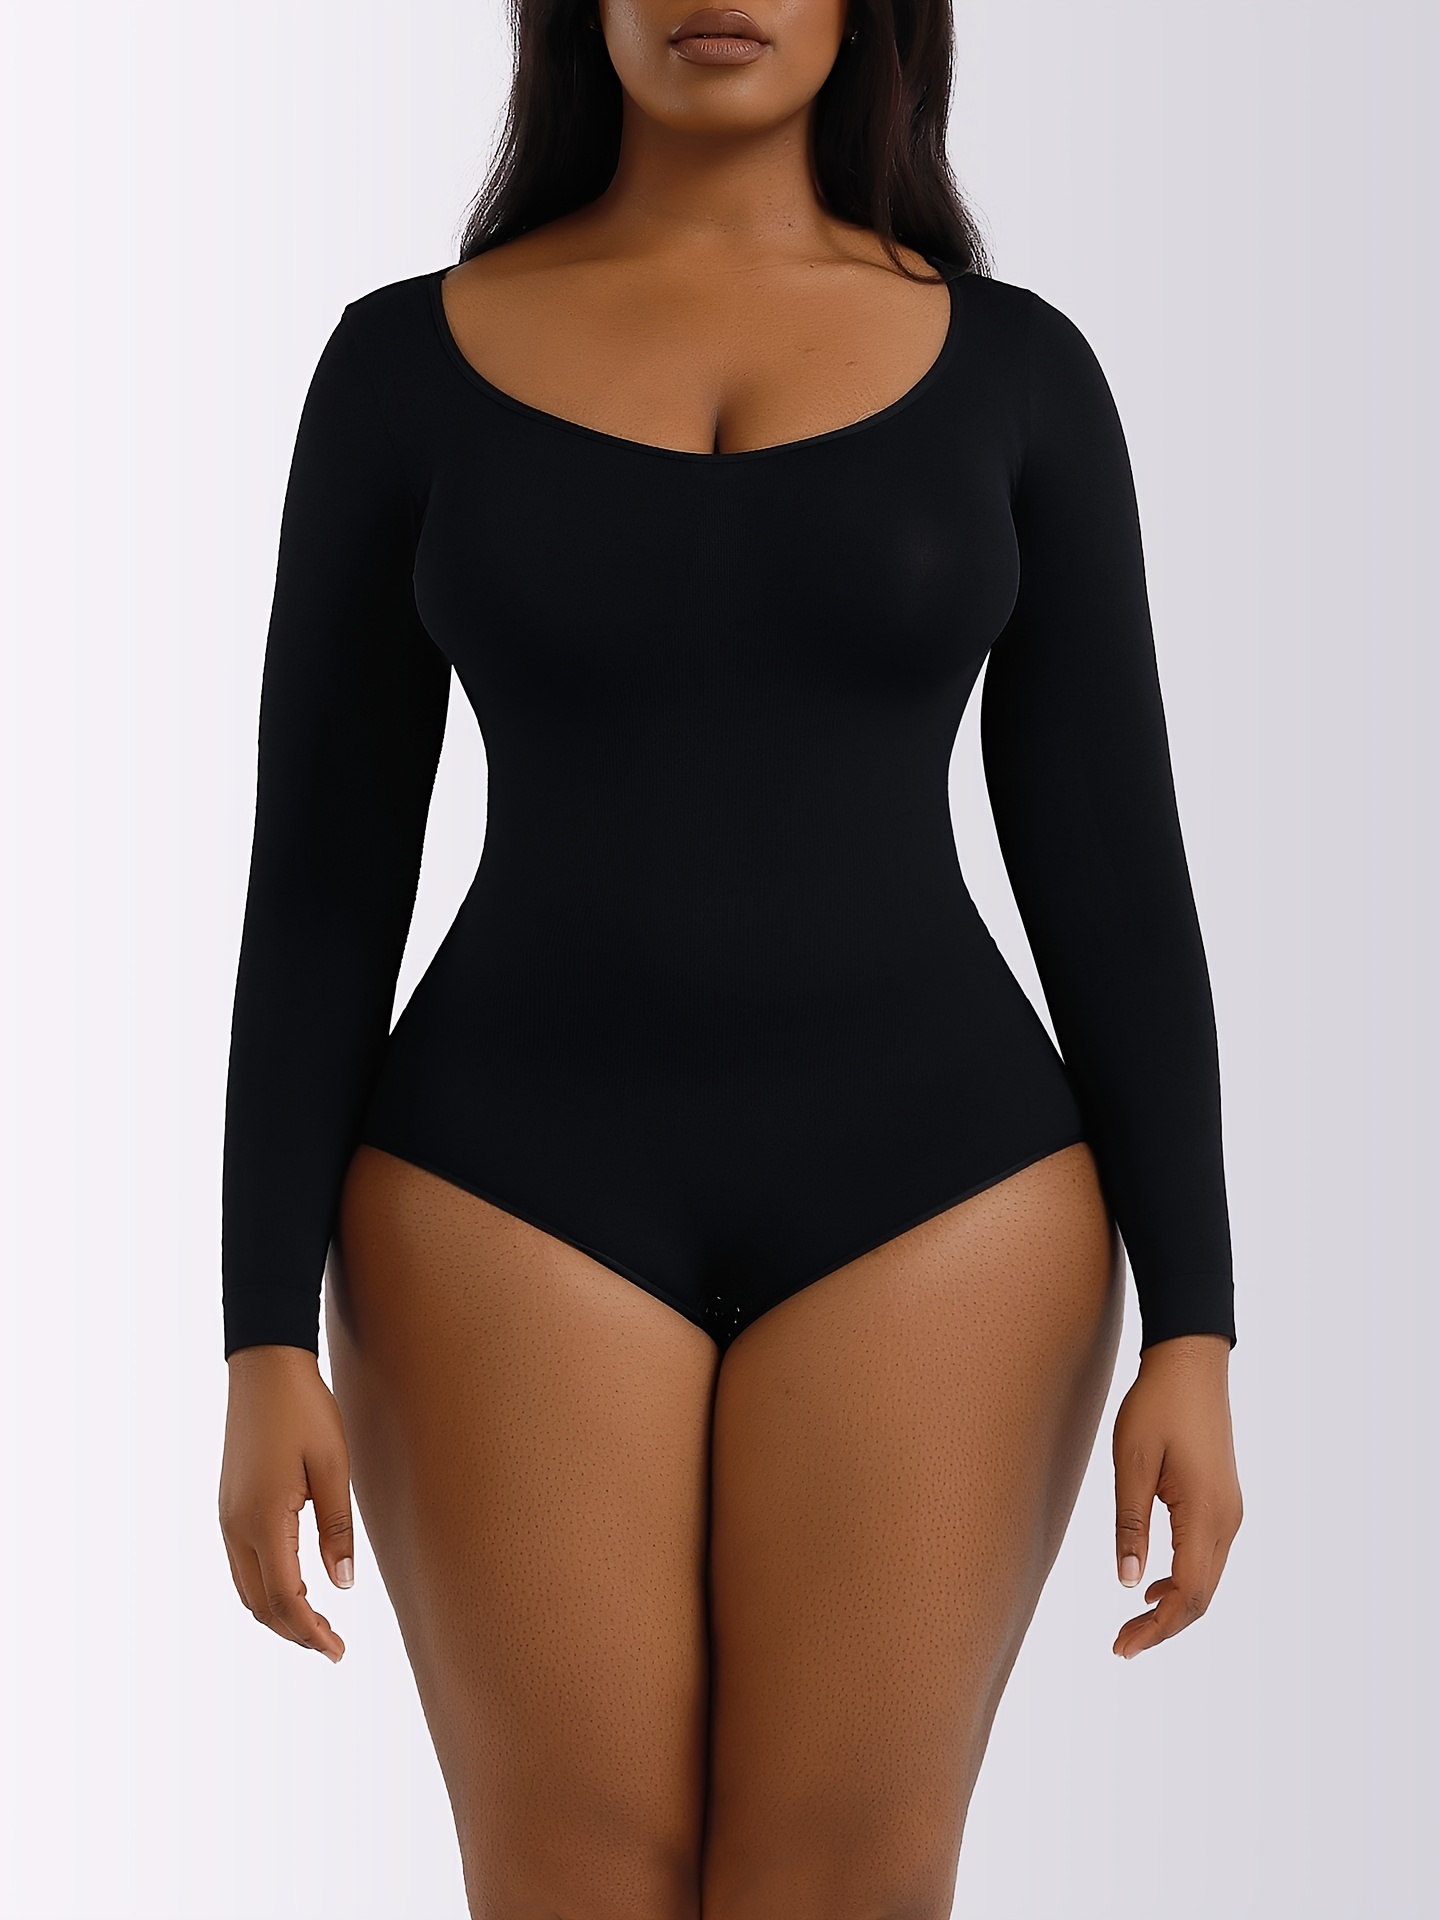 Cotton Bodysuits for Women Long Sleeves Boat Neck Minimalist